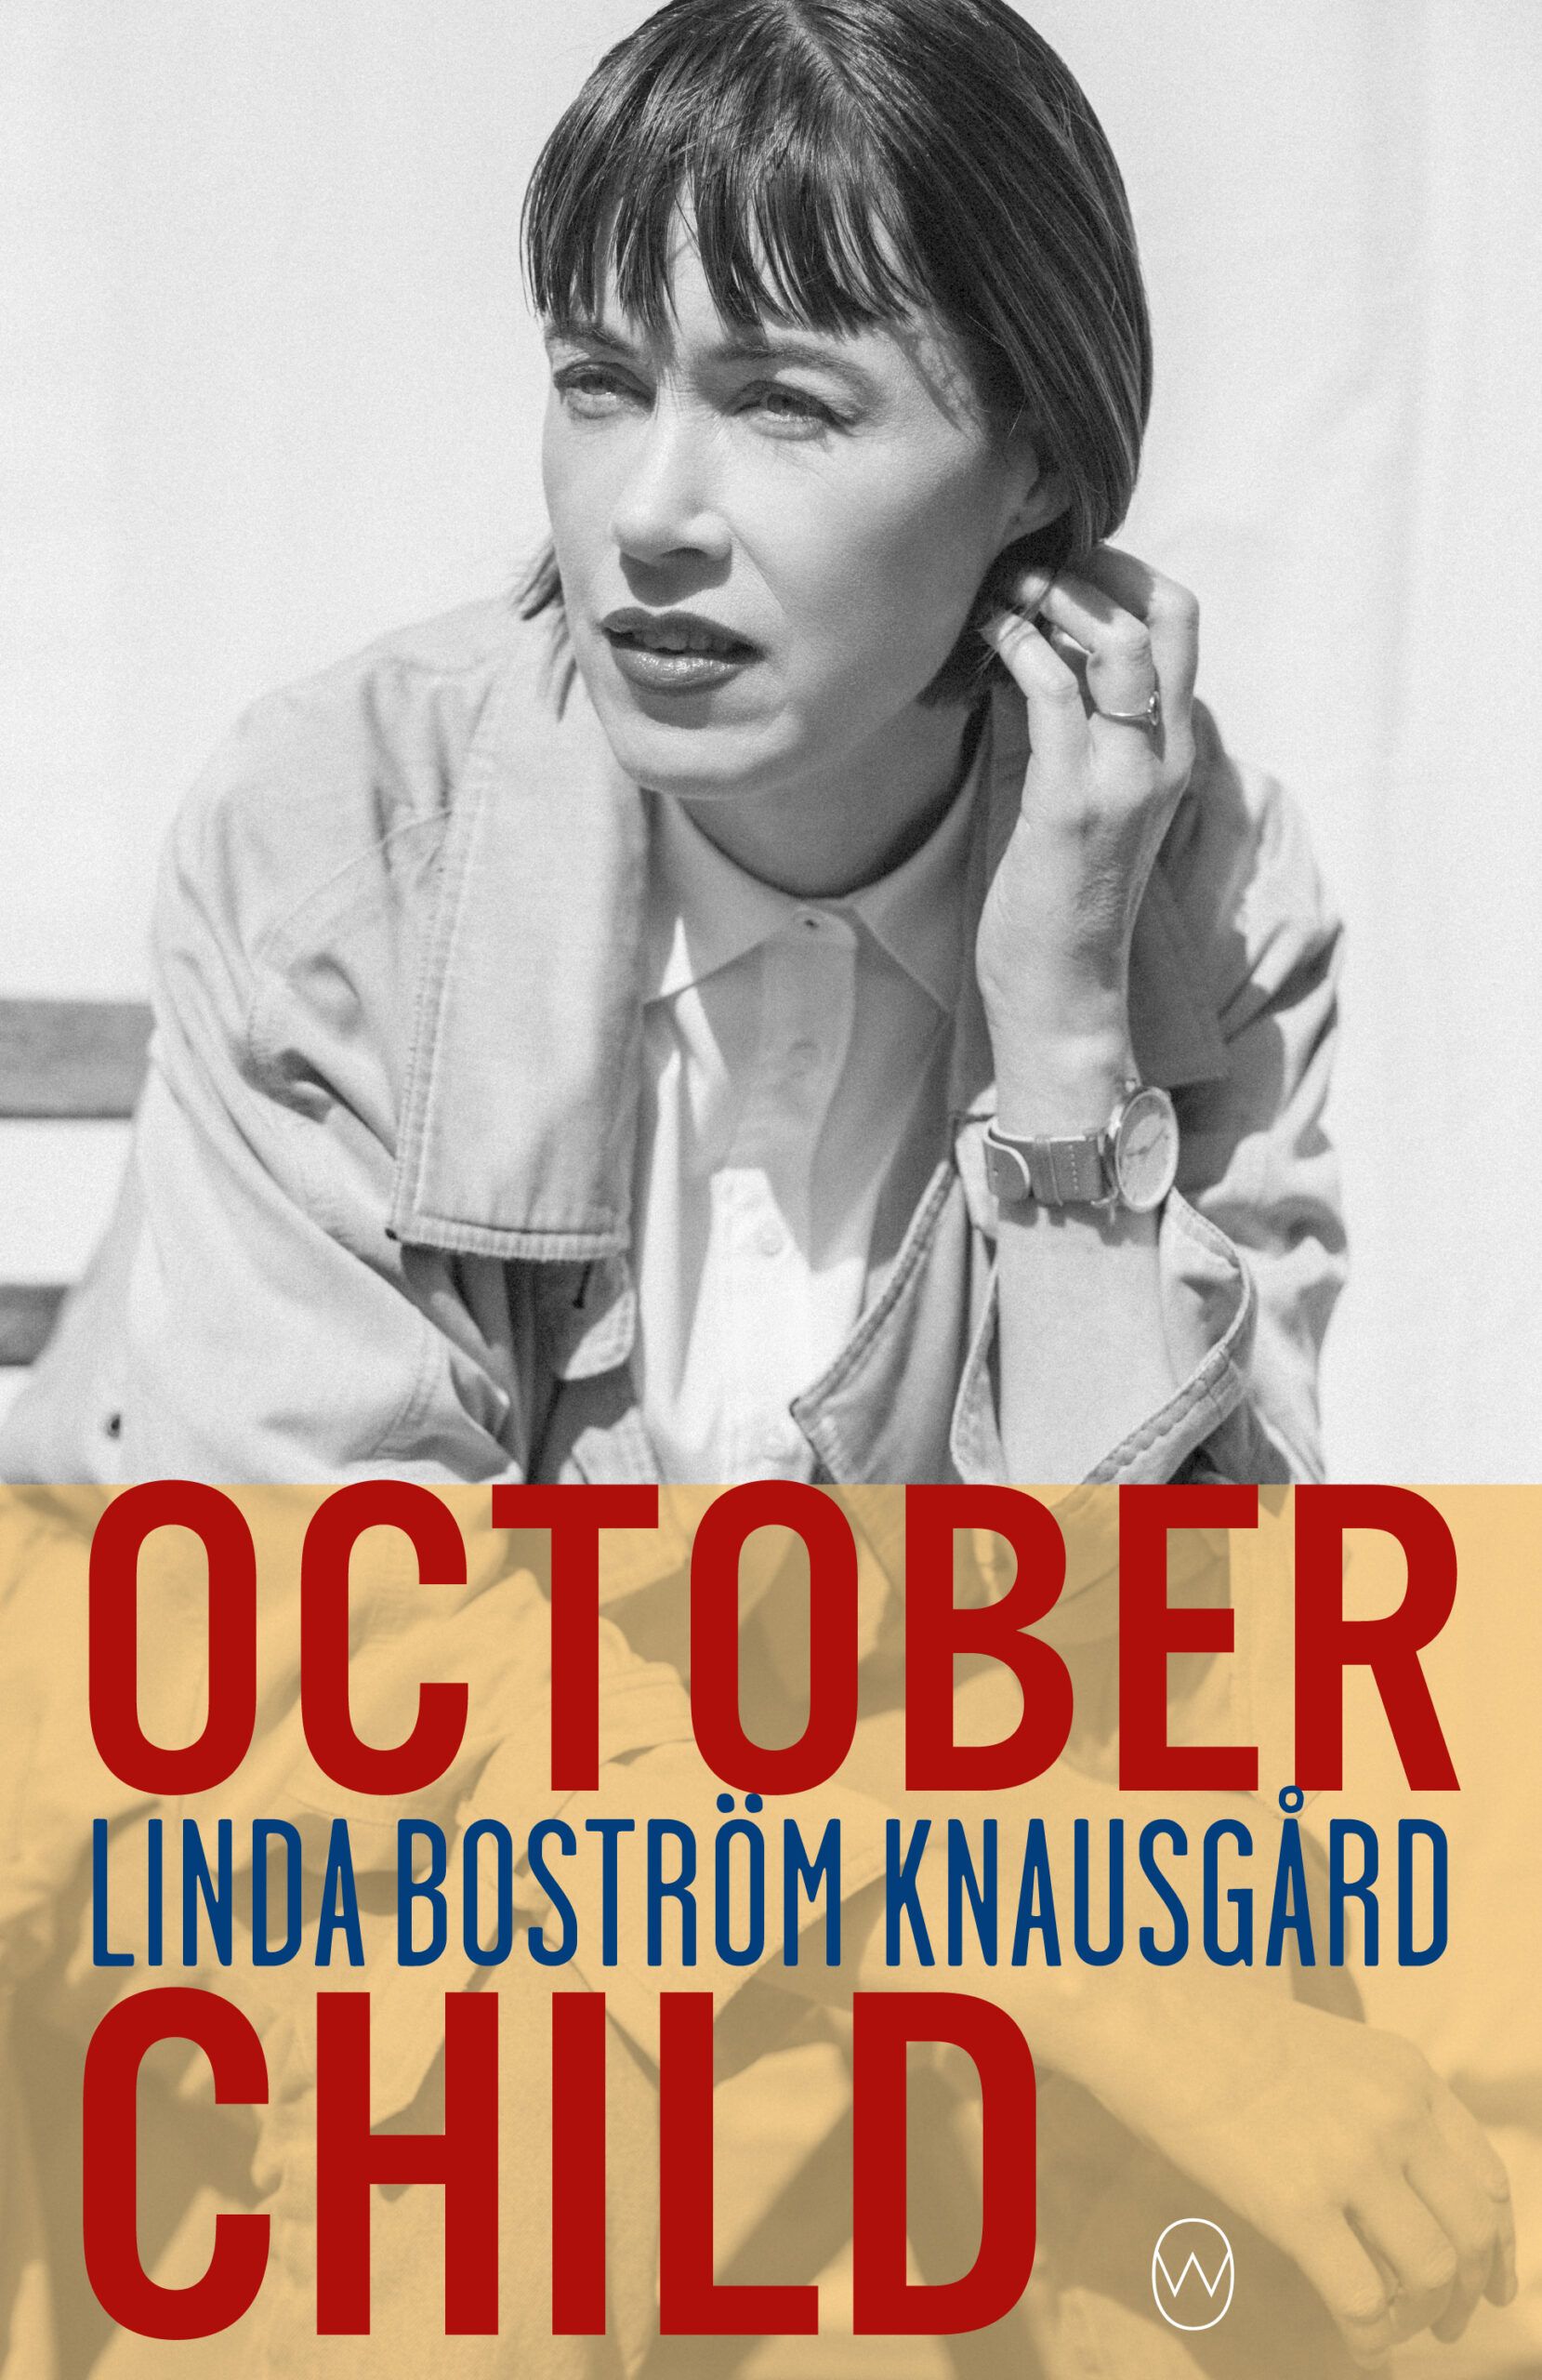 October Child by Linda Boström Knausgård, translated by Saskia Vogel